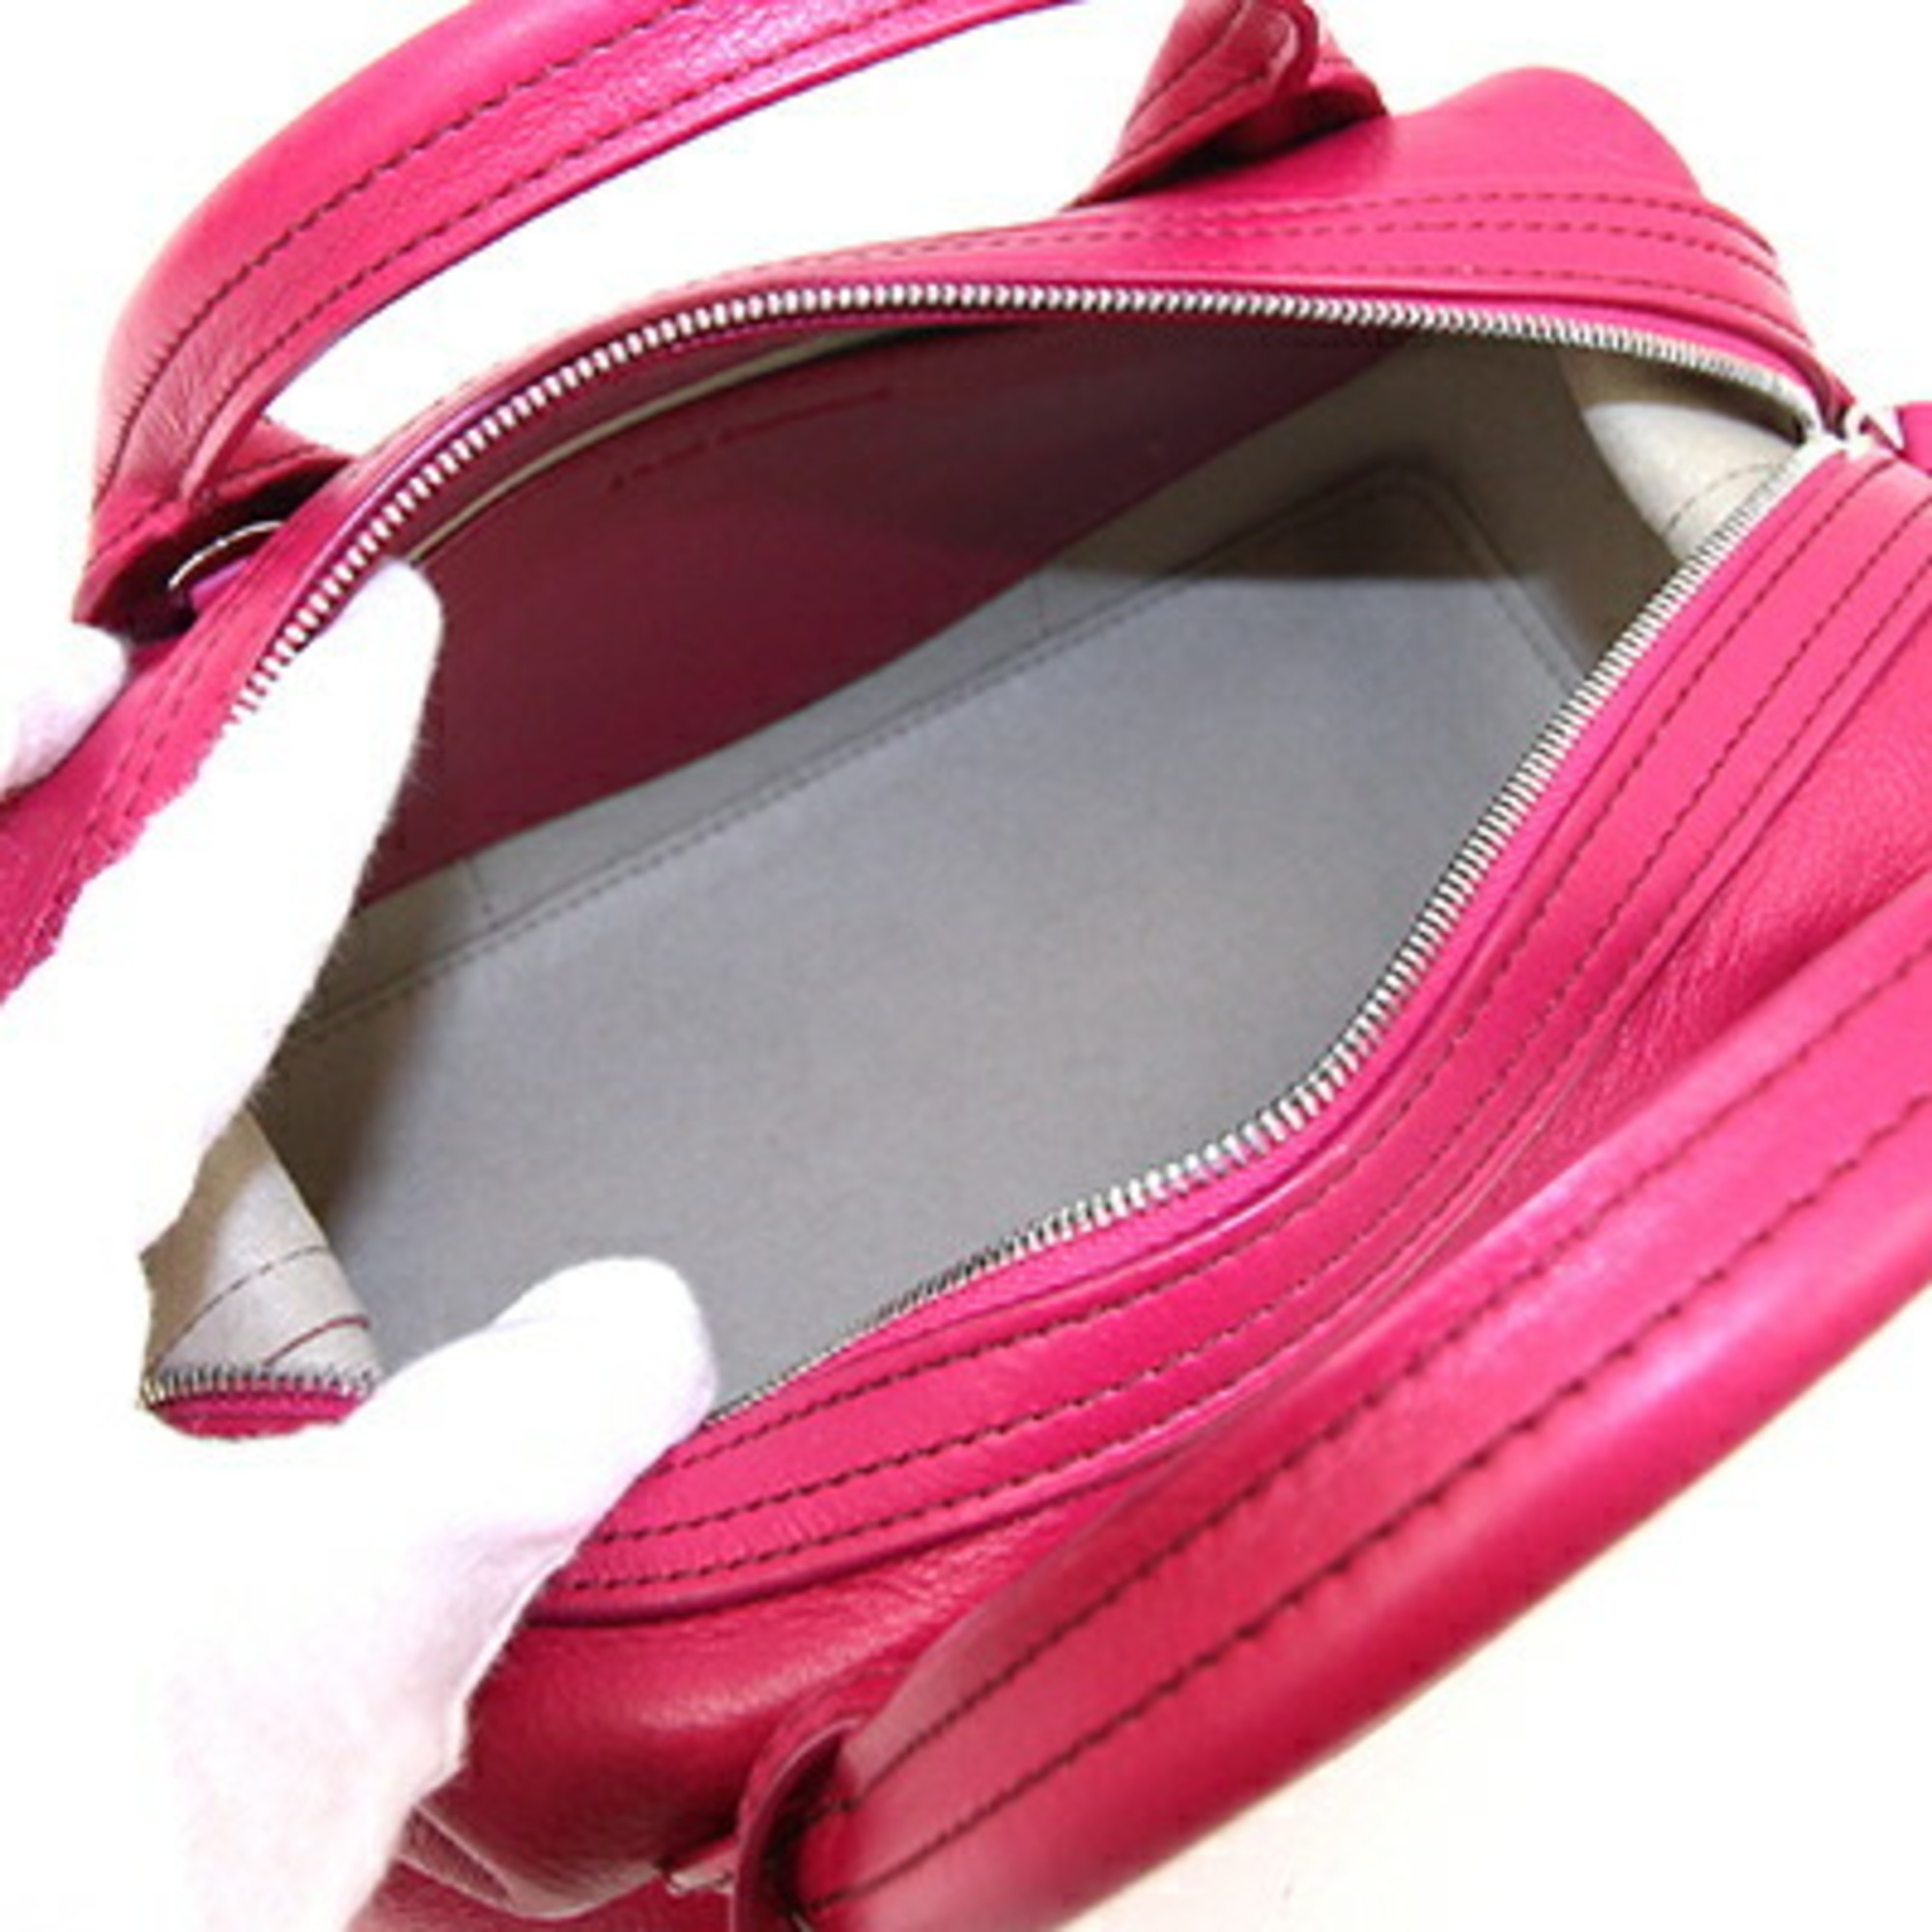 J&M Davidson Handbag BAULETTO S Pink Leather Women's Shoulder Bag Boston DAVIDSON